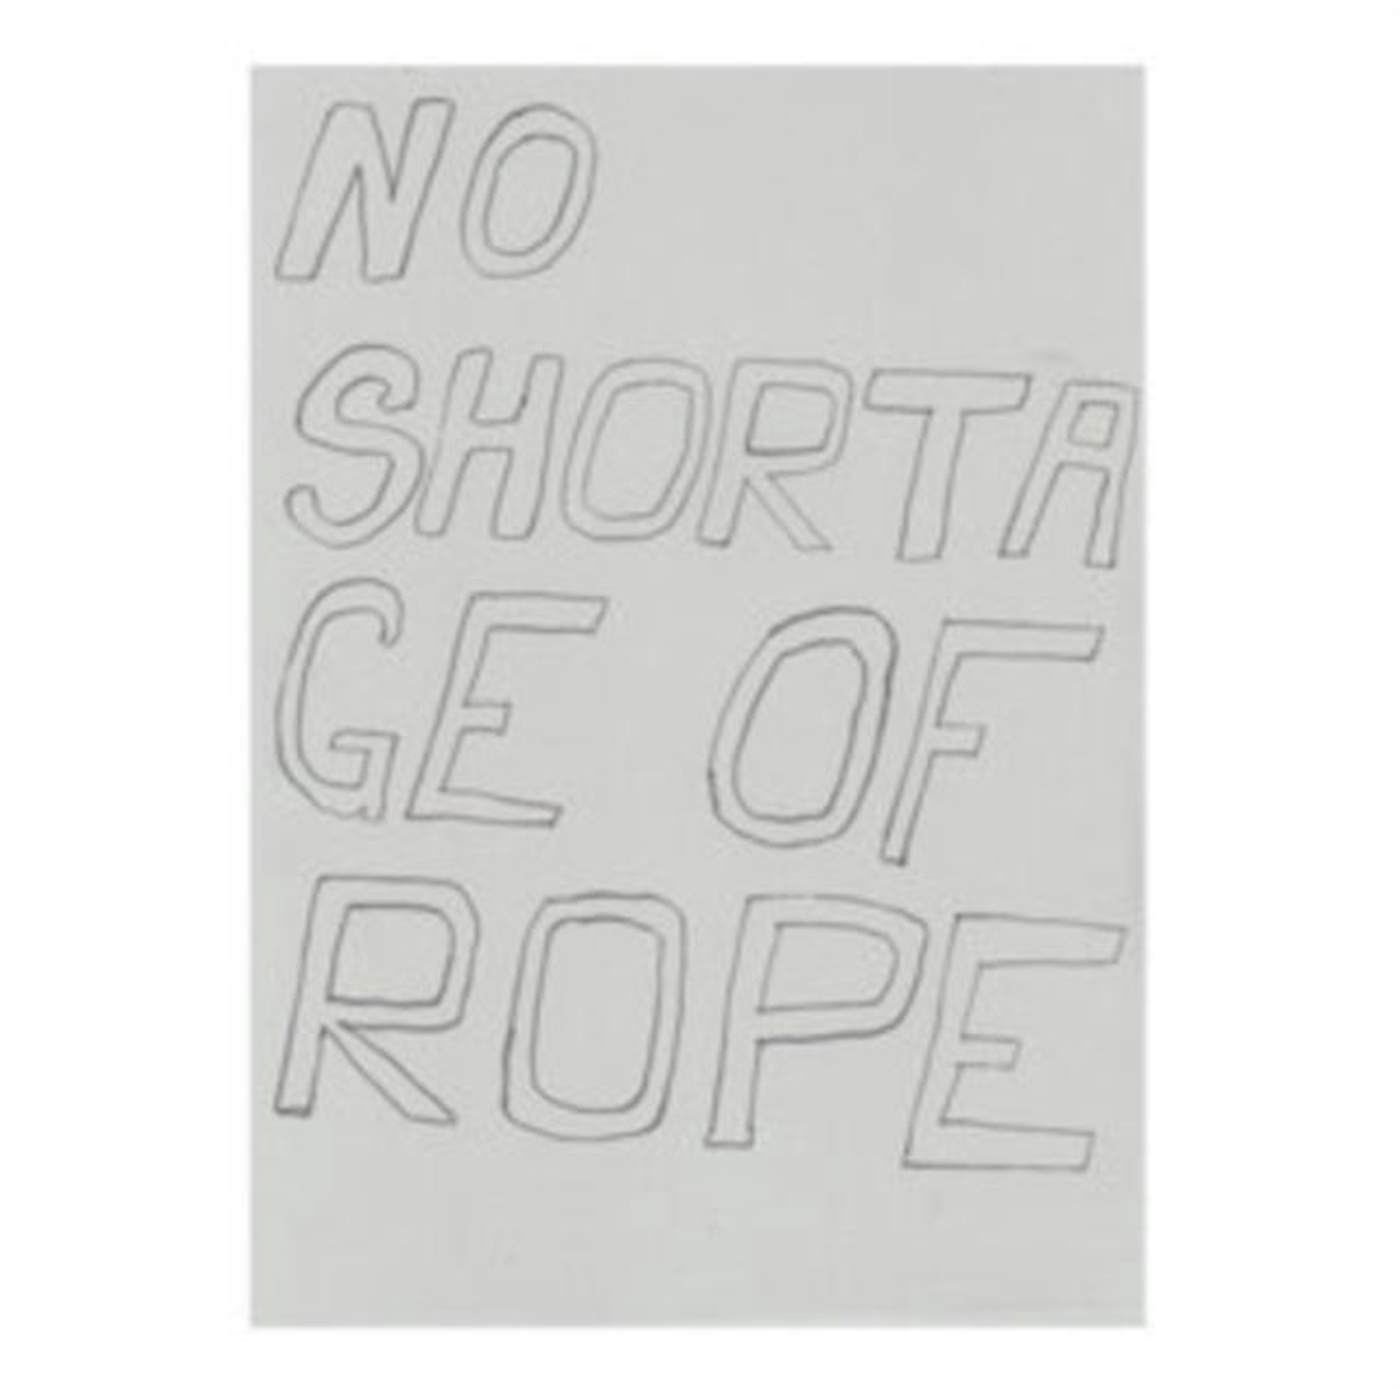 Nick Klein LP Vinyl Record - No Shortage Of Rope